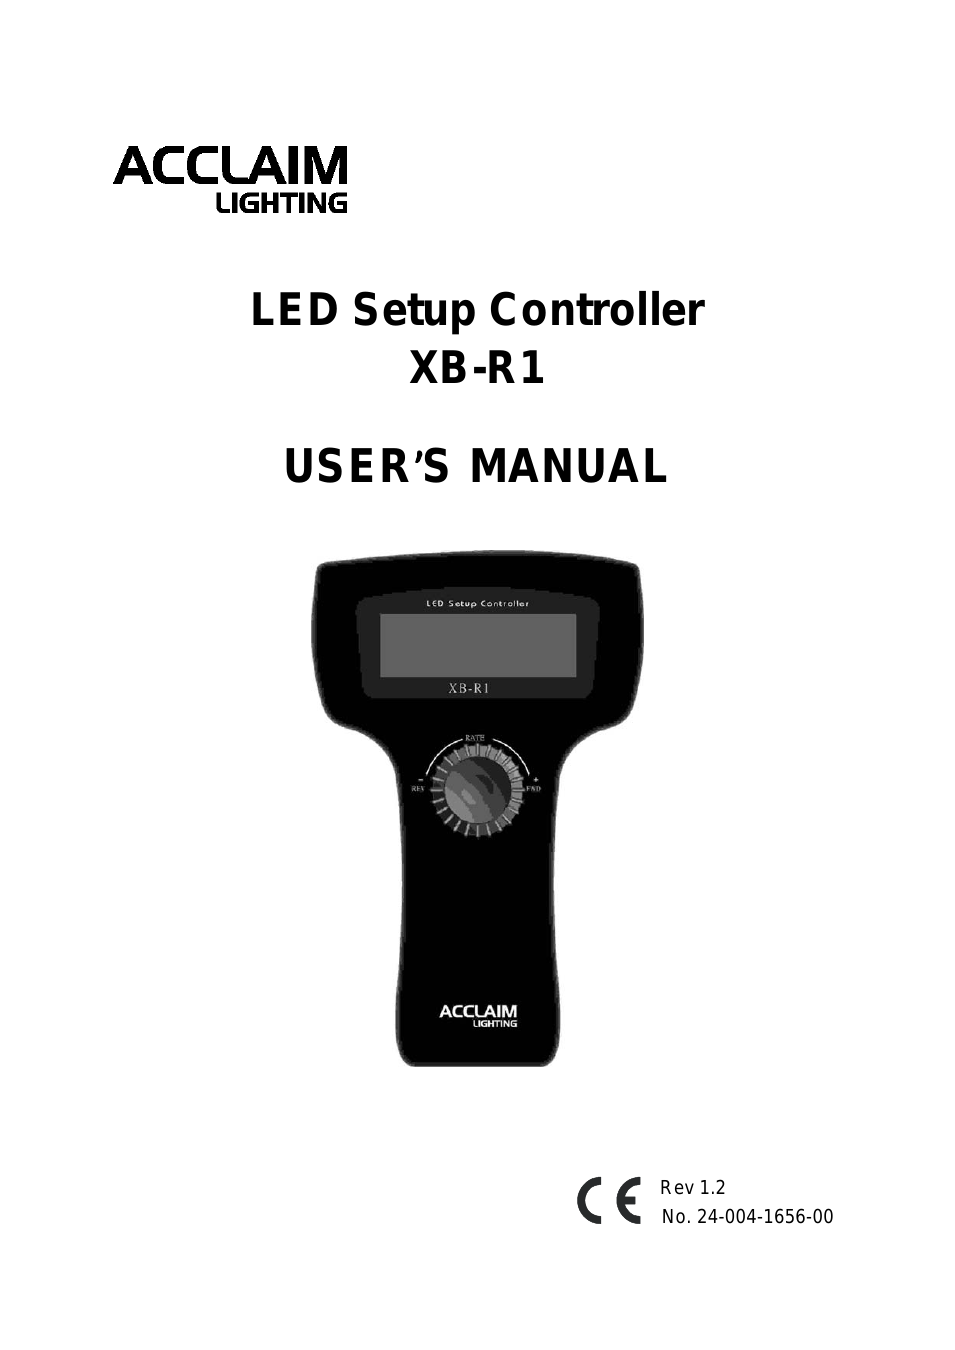 XB-R1 Setup tool